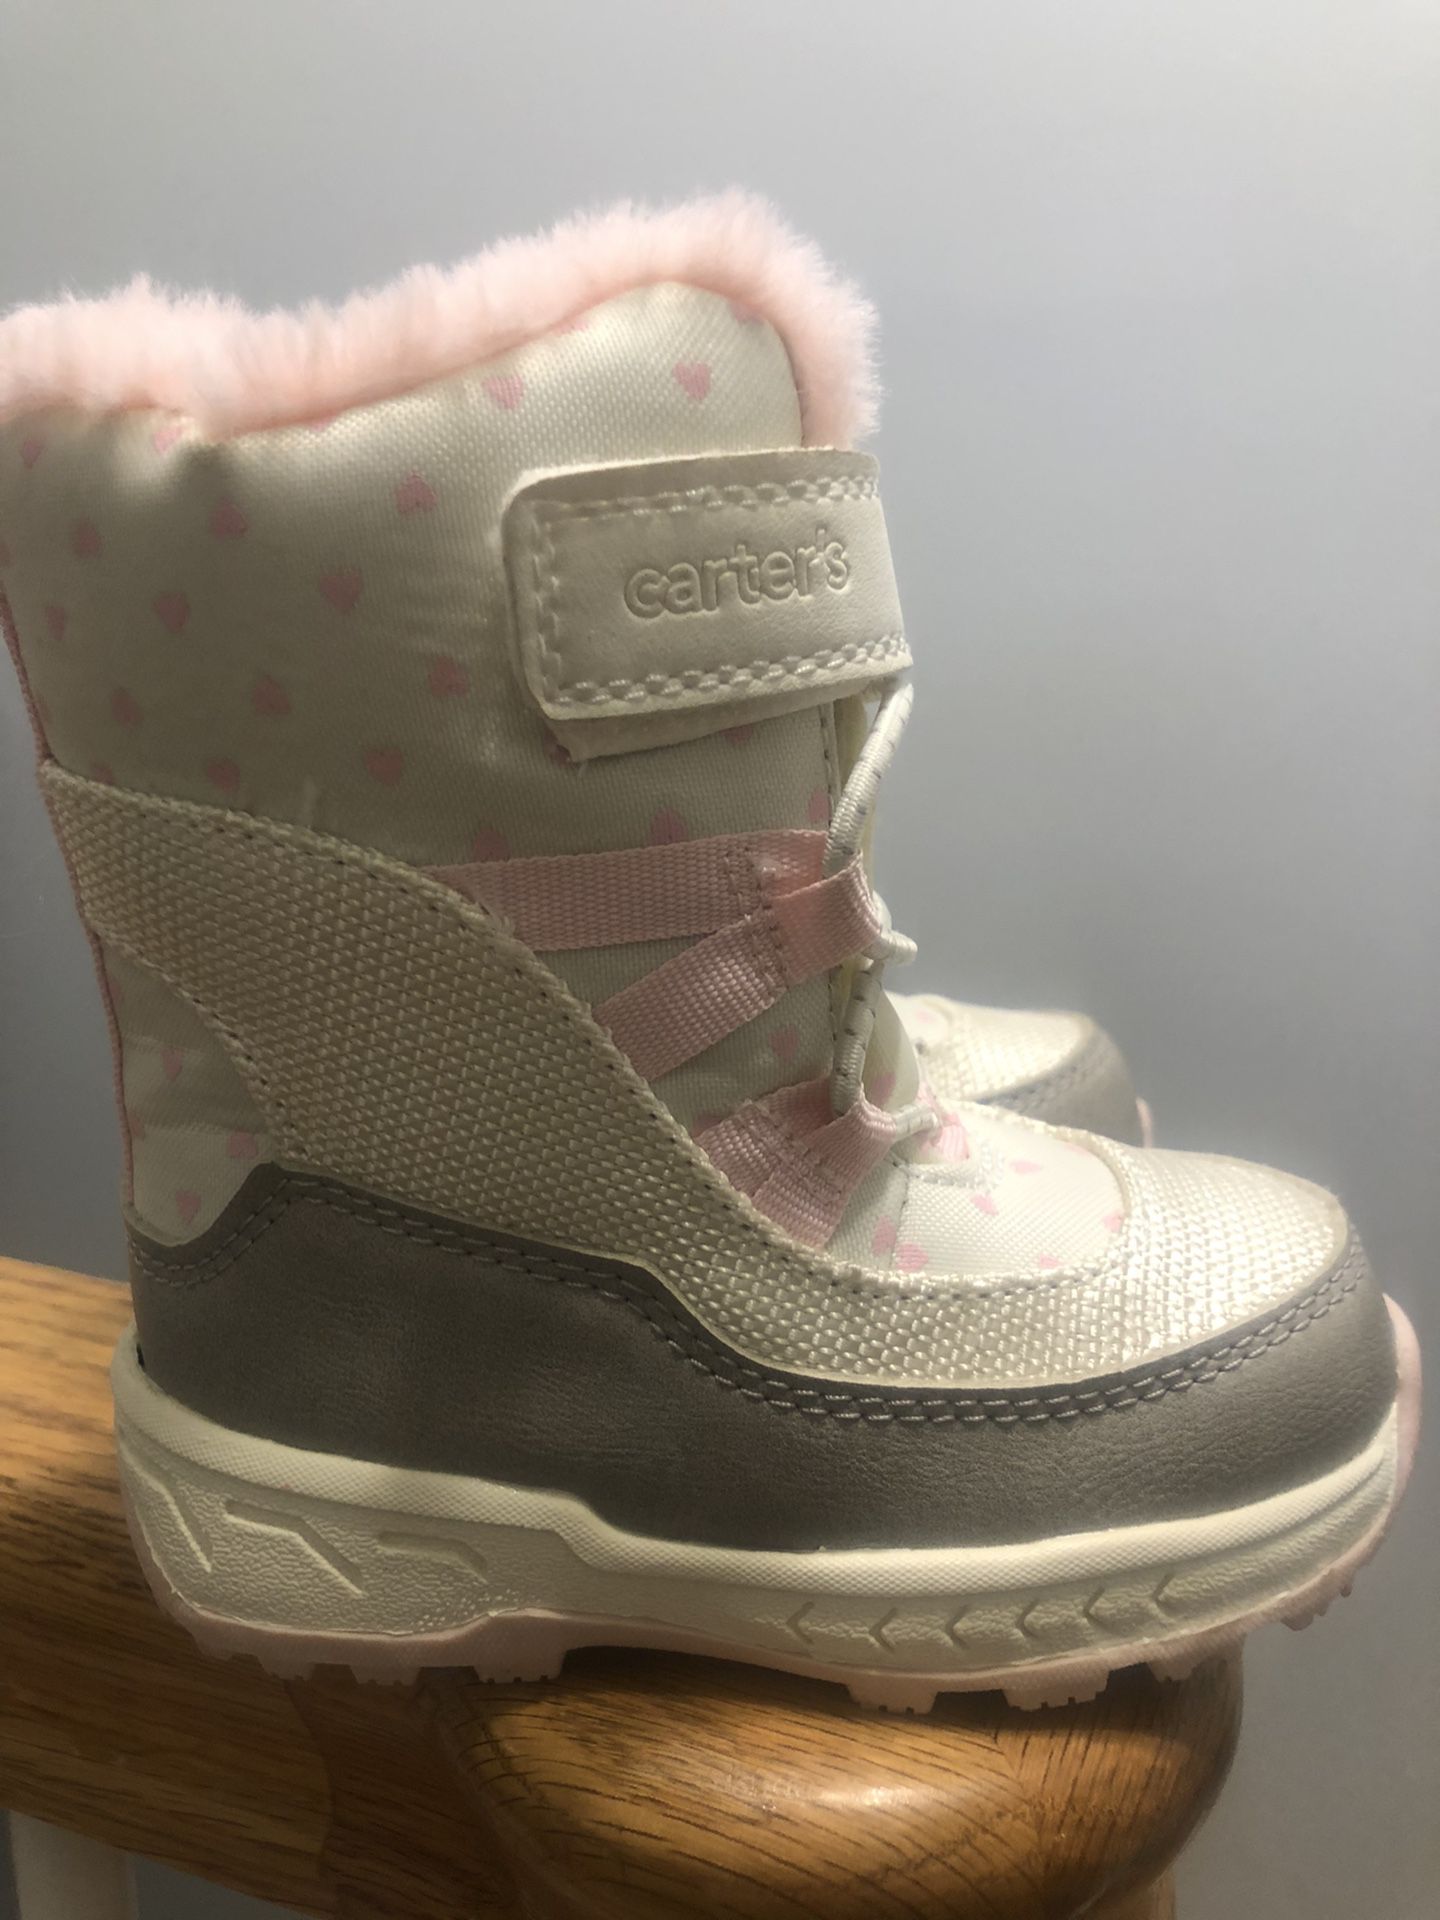 Carter’s Toddler Snow Boots